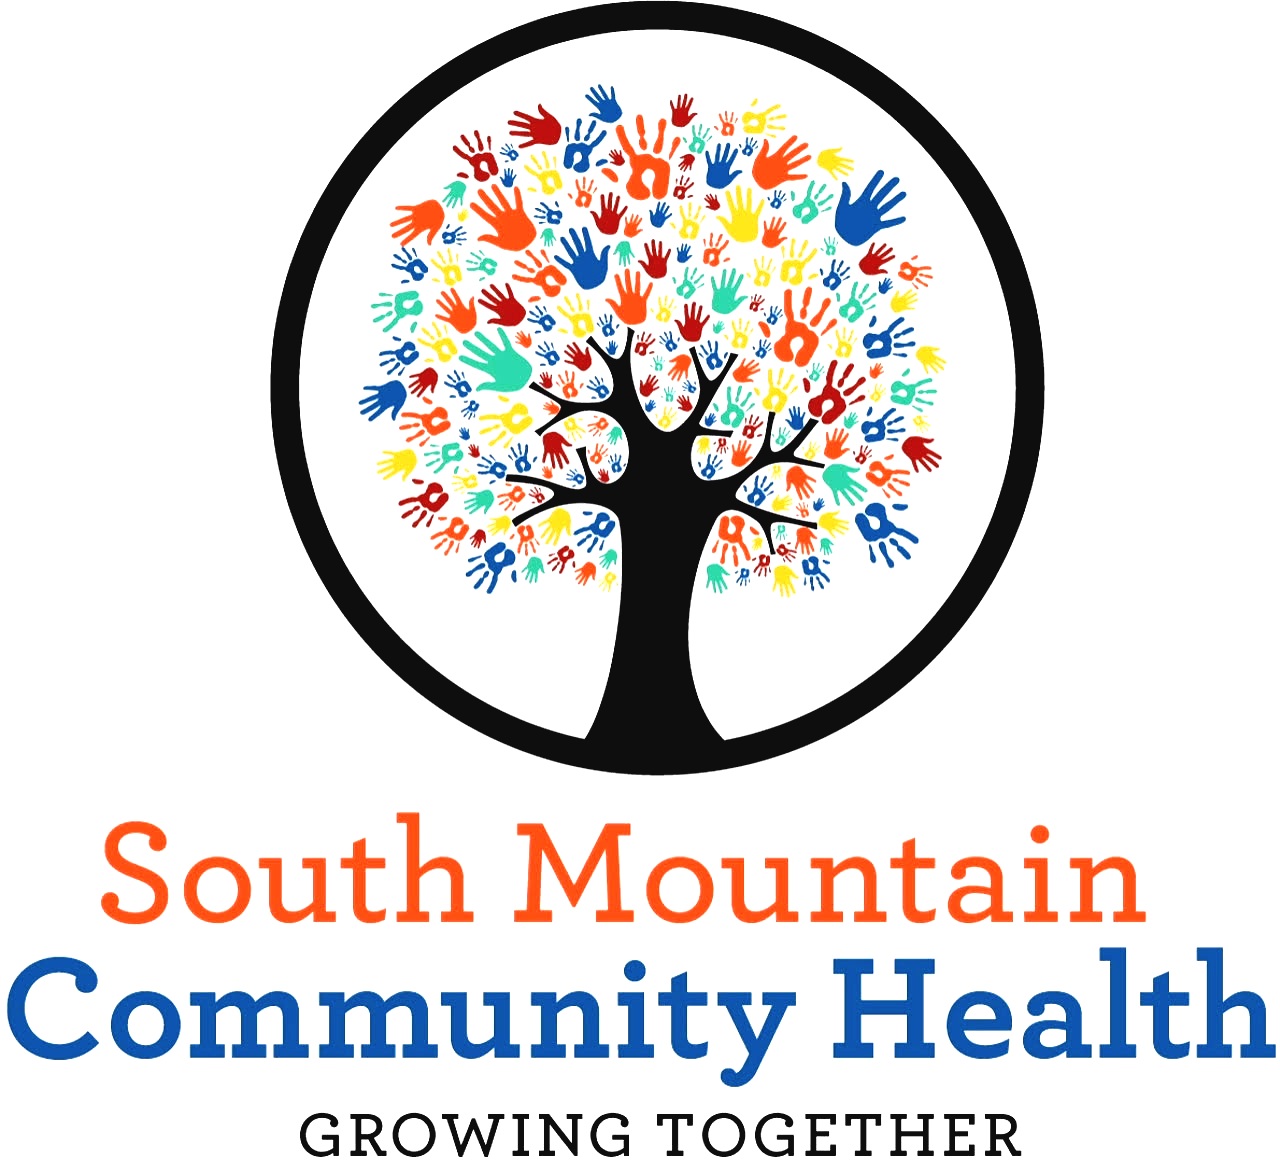 South Mountain Community Health